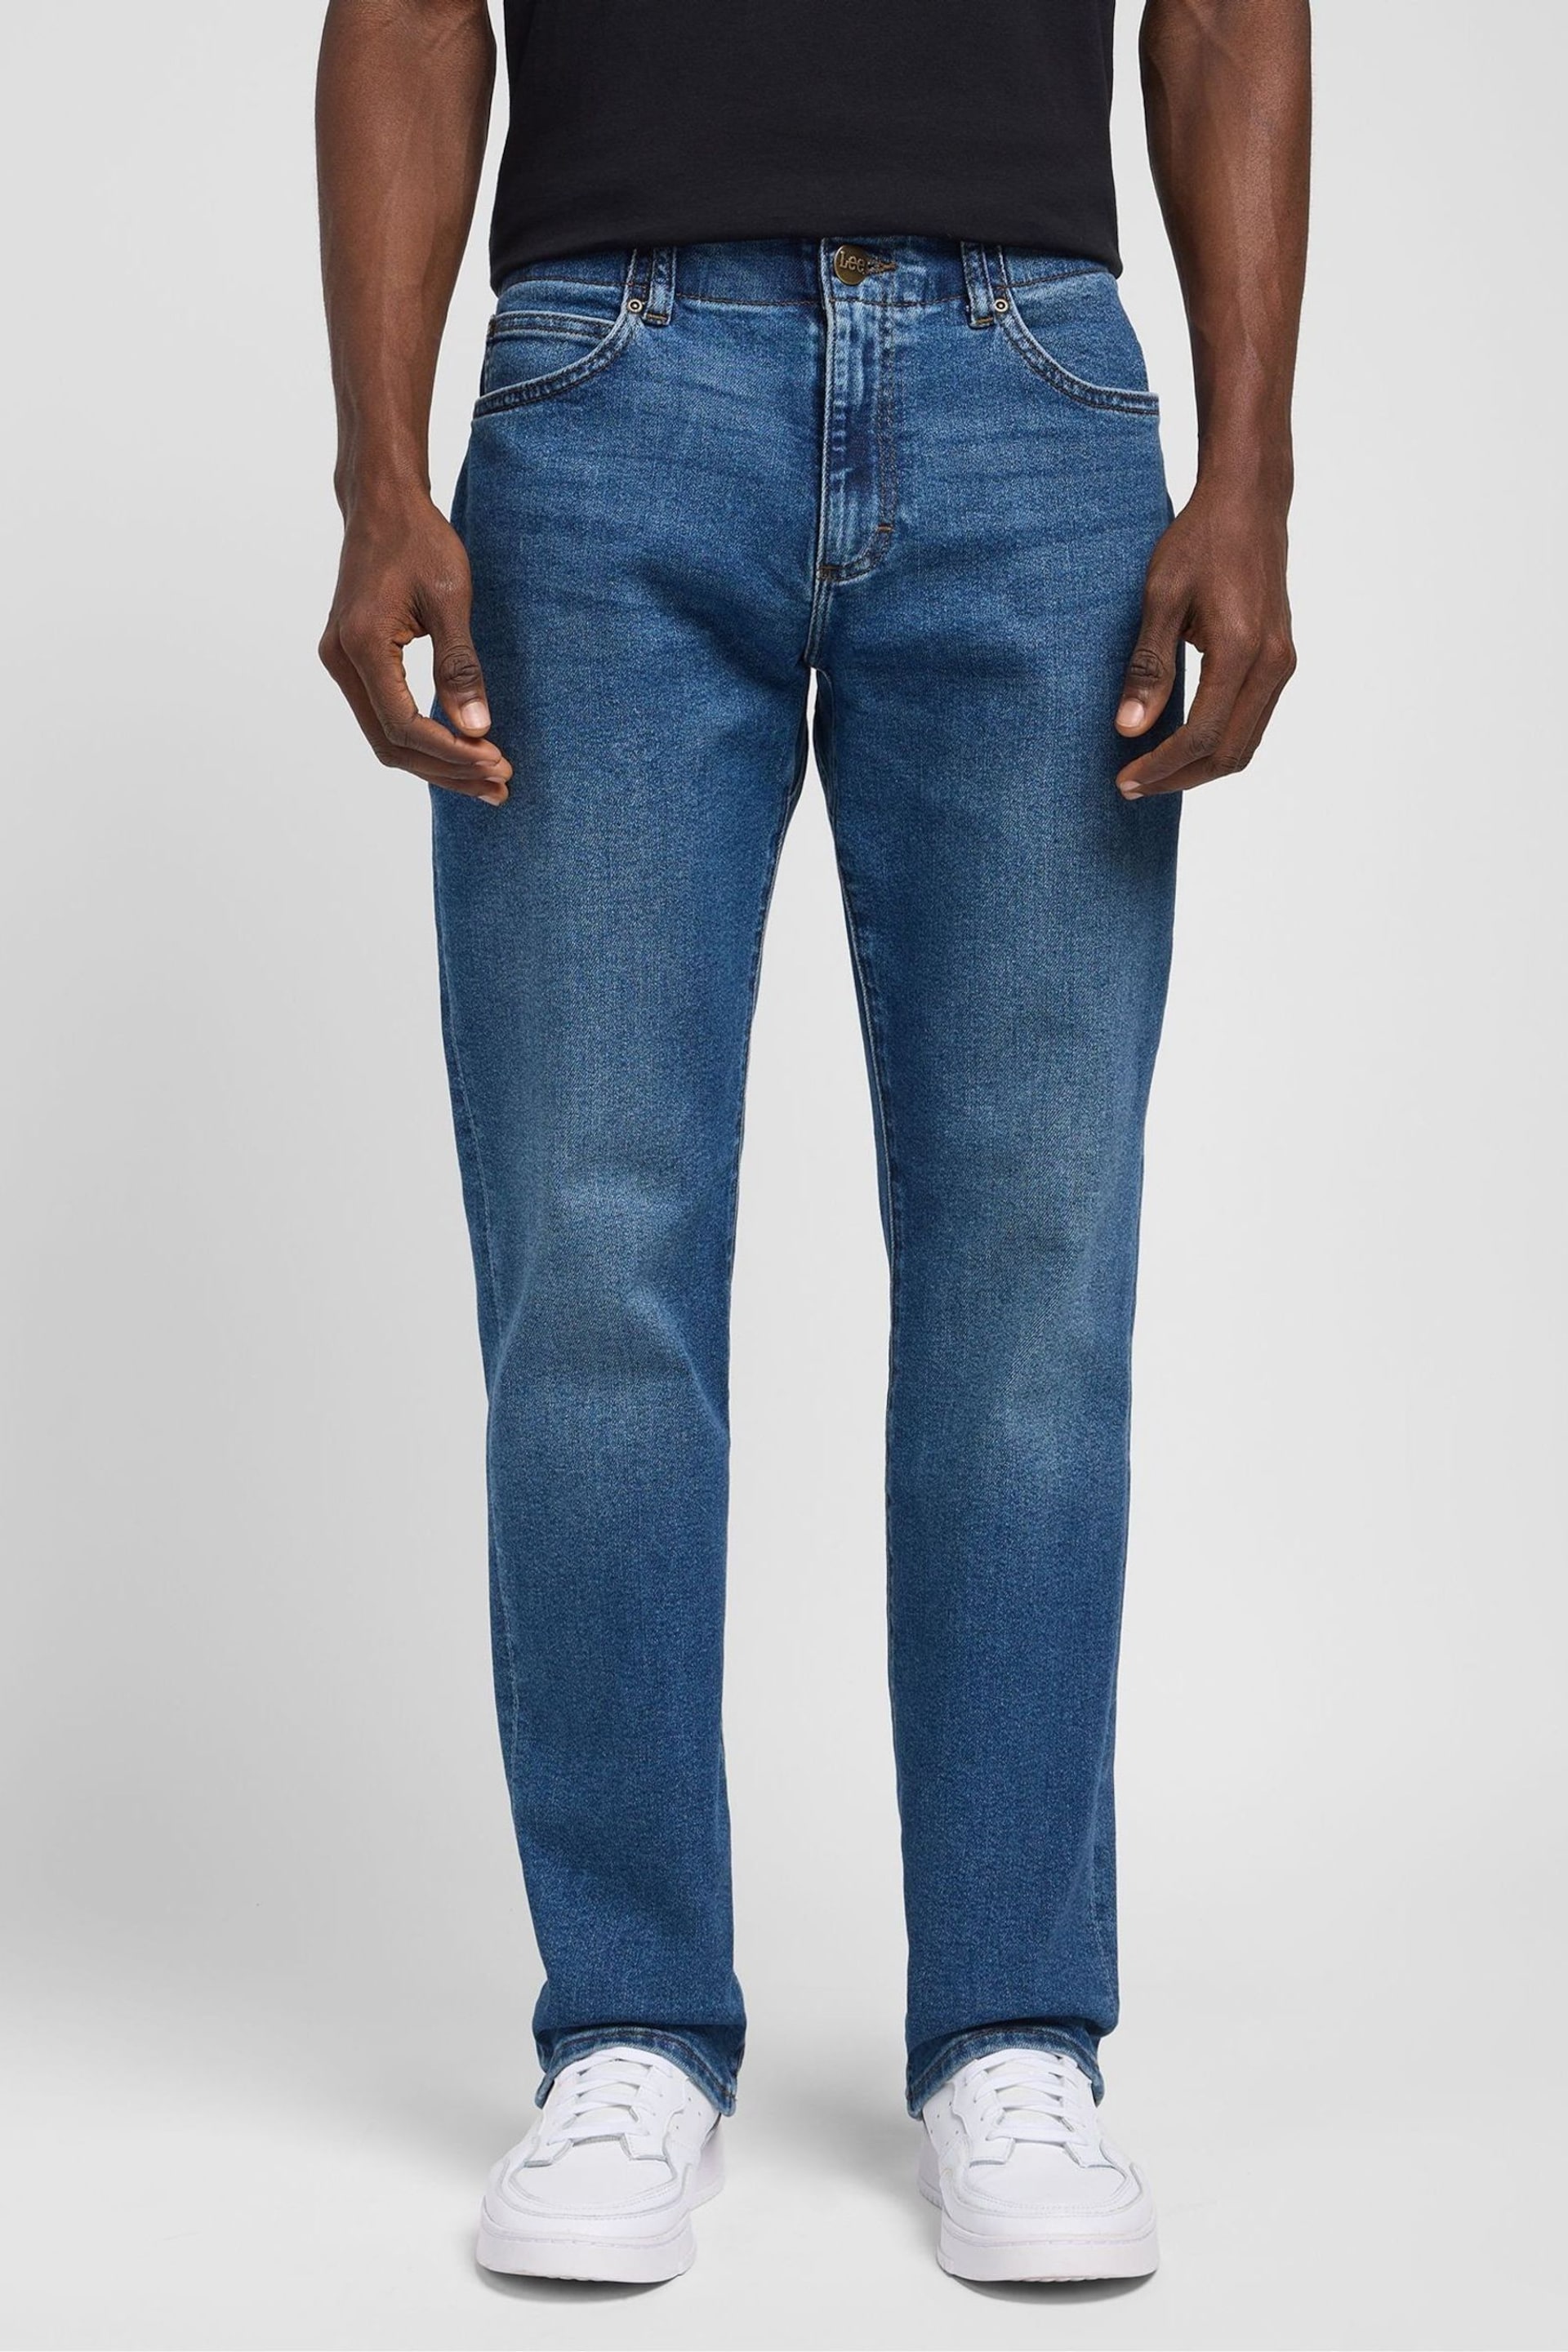 Lee Straight Fit Mid Cream Denim Jeans - Image 1 of 6